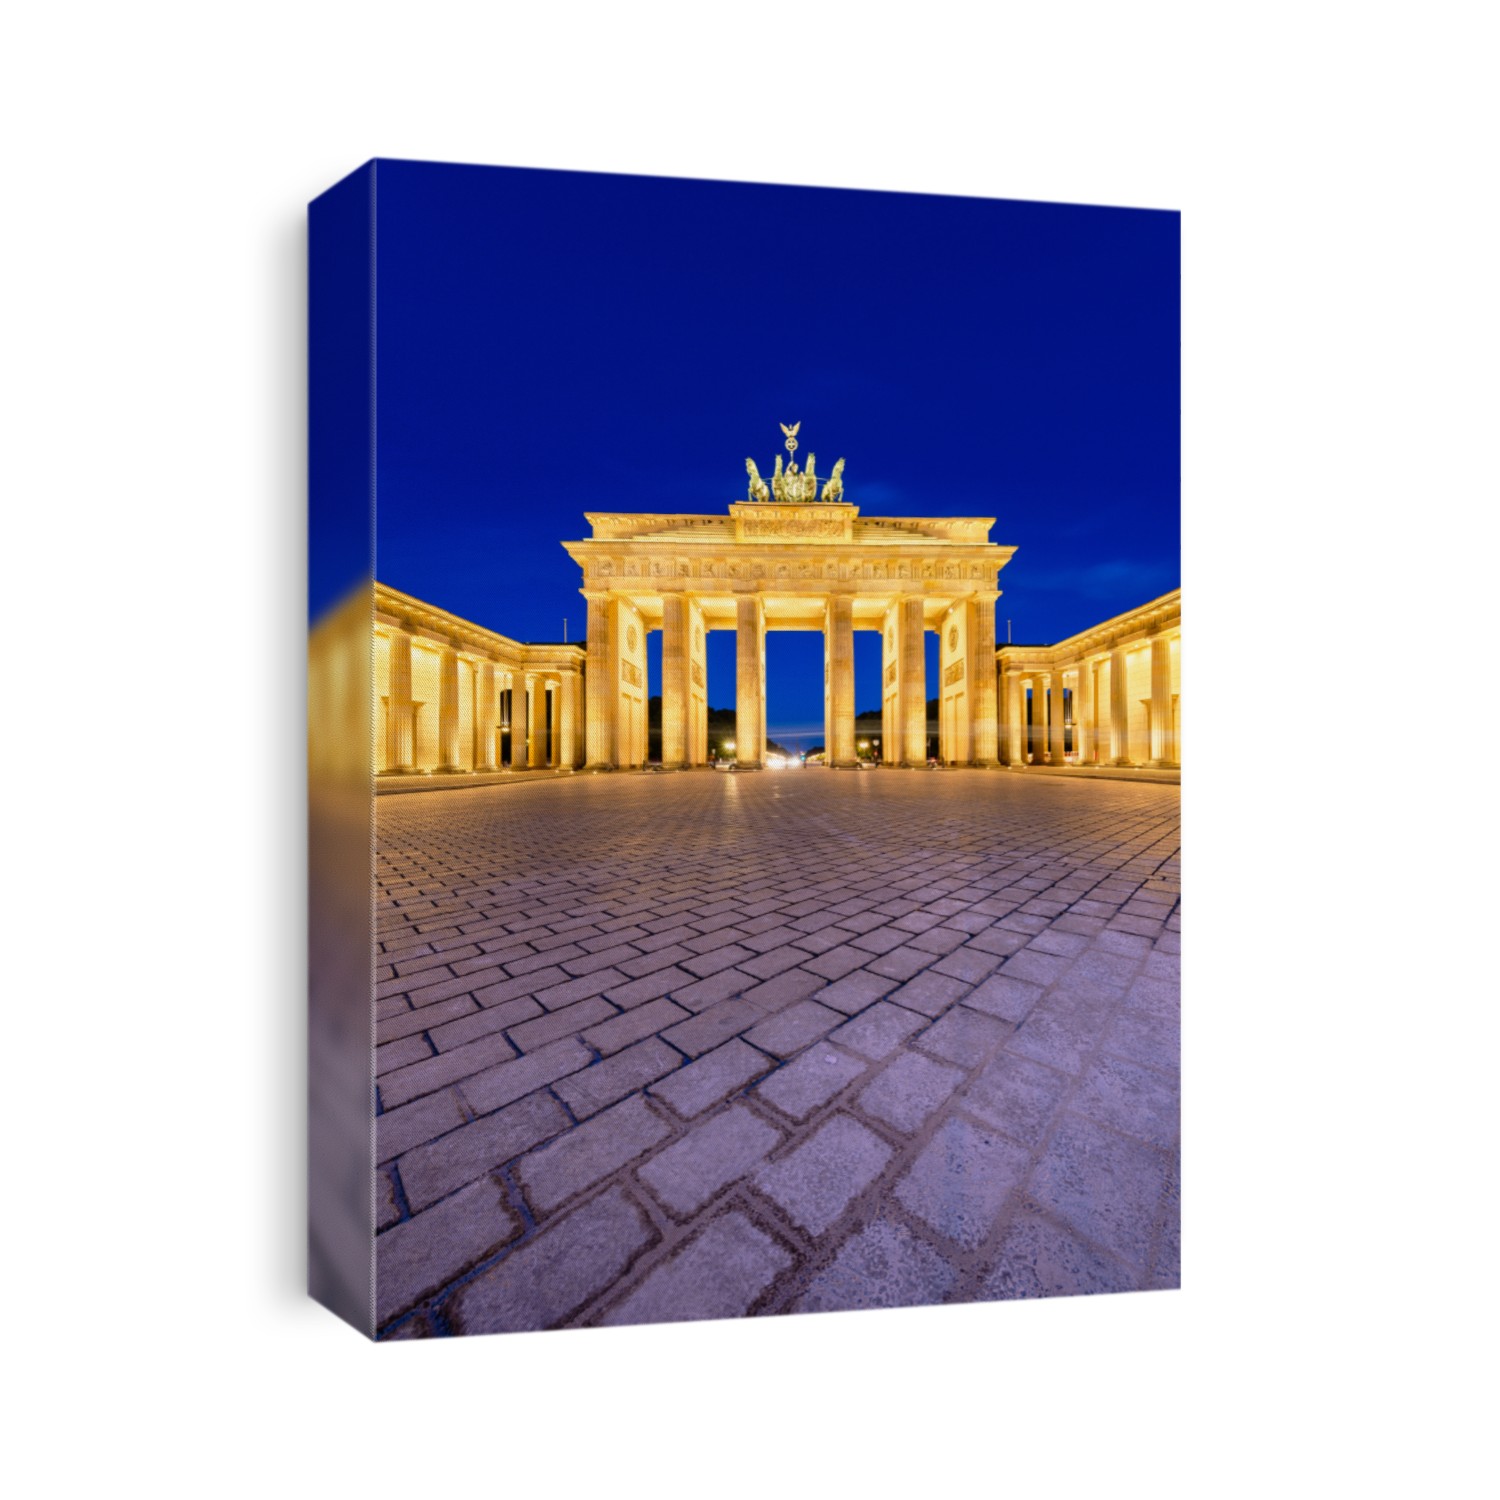 Brandenburg Gate in Berlin, Germany at twilight.